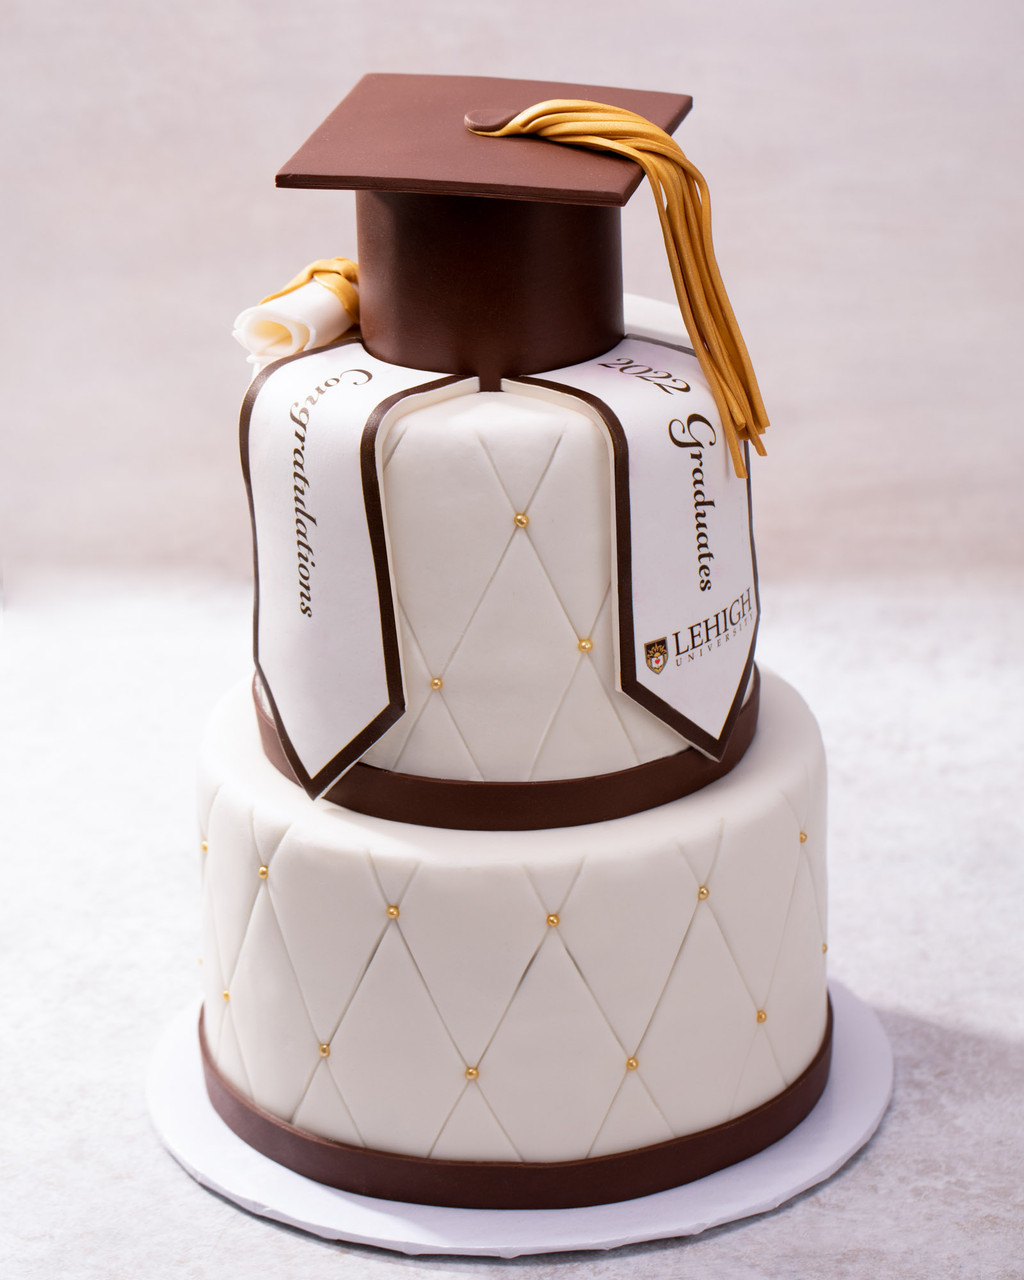 You Did It! Graduation Cake - Palermo 365 Shop